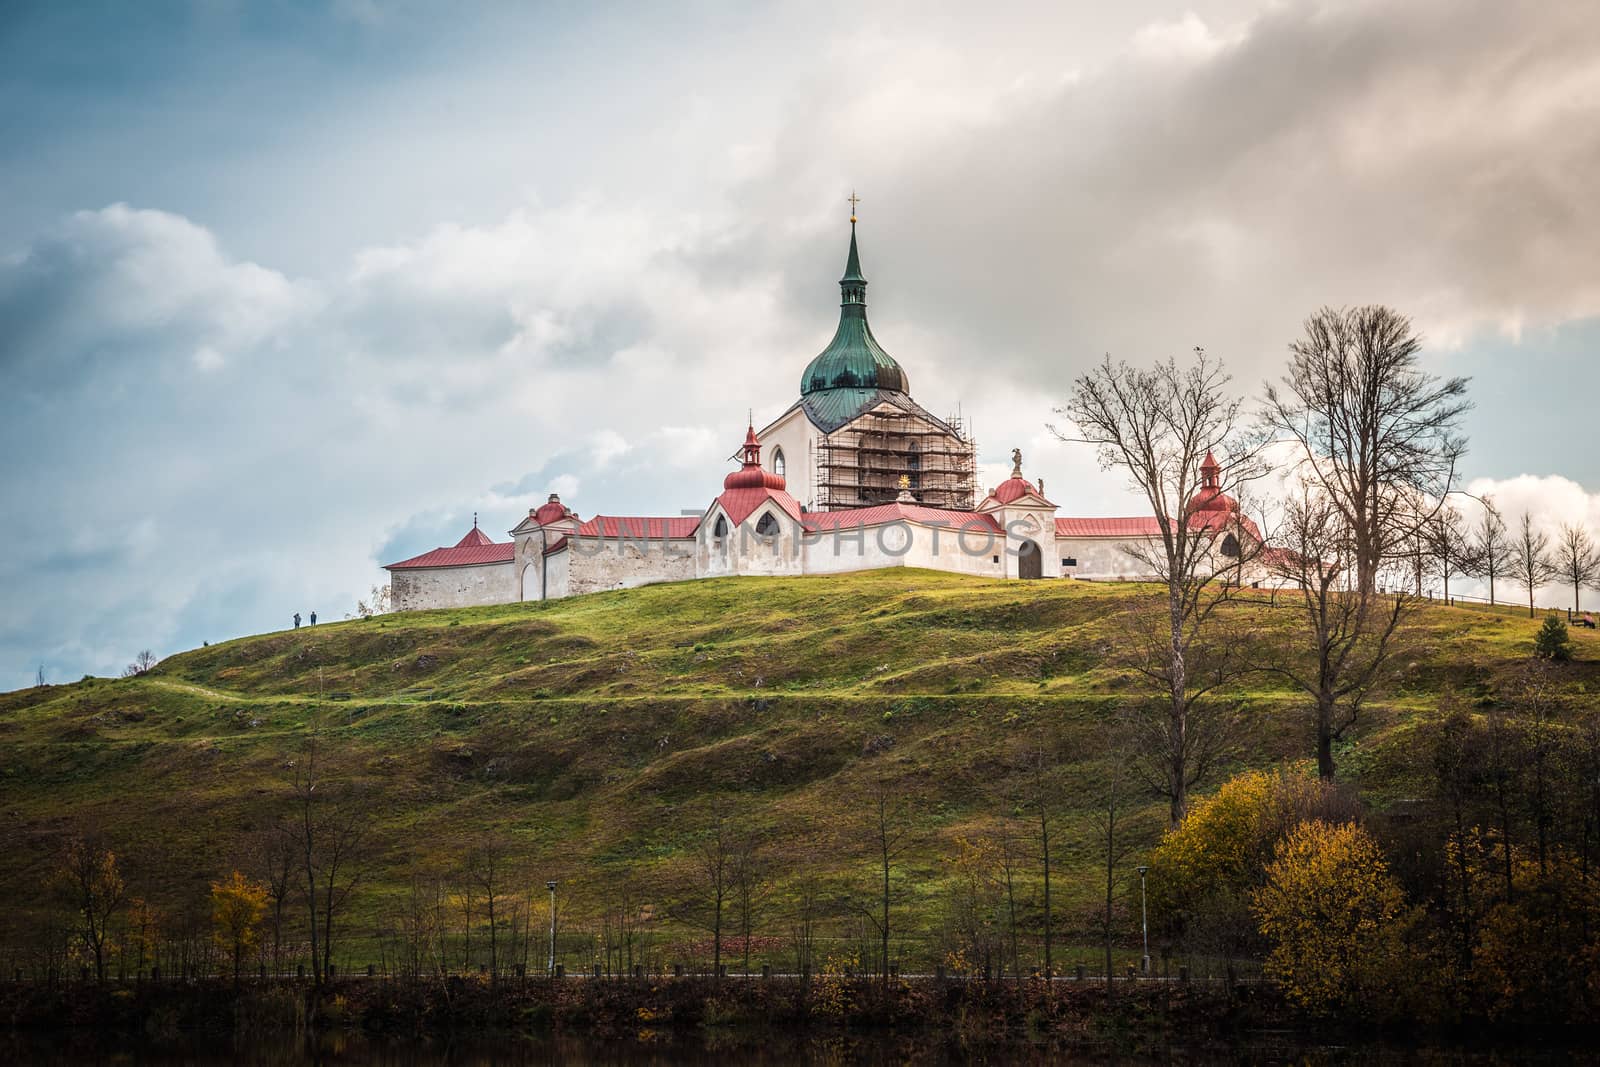 The pilgrimage church zelena hora - green hill - Monument UNESCO